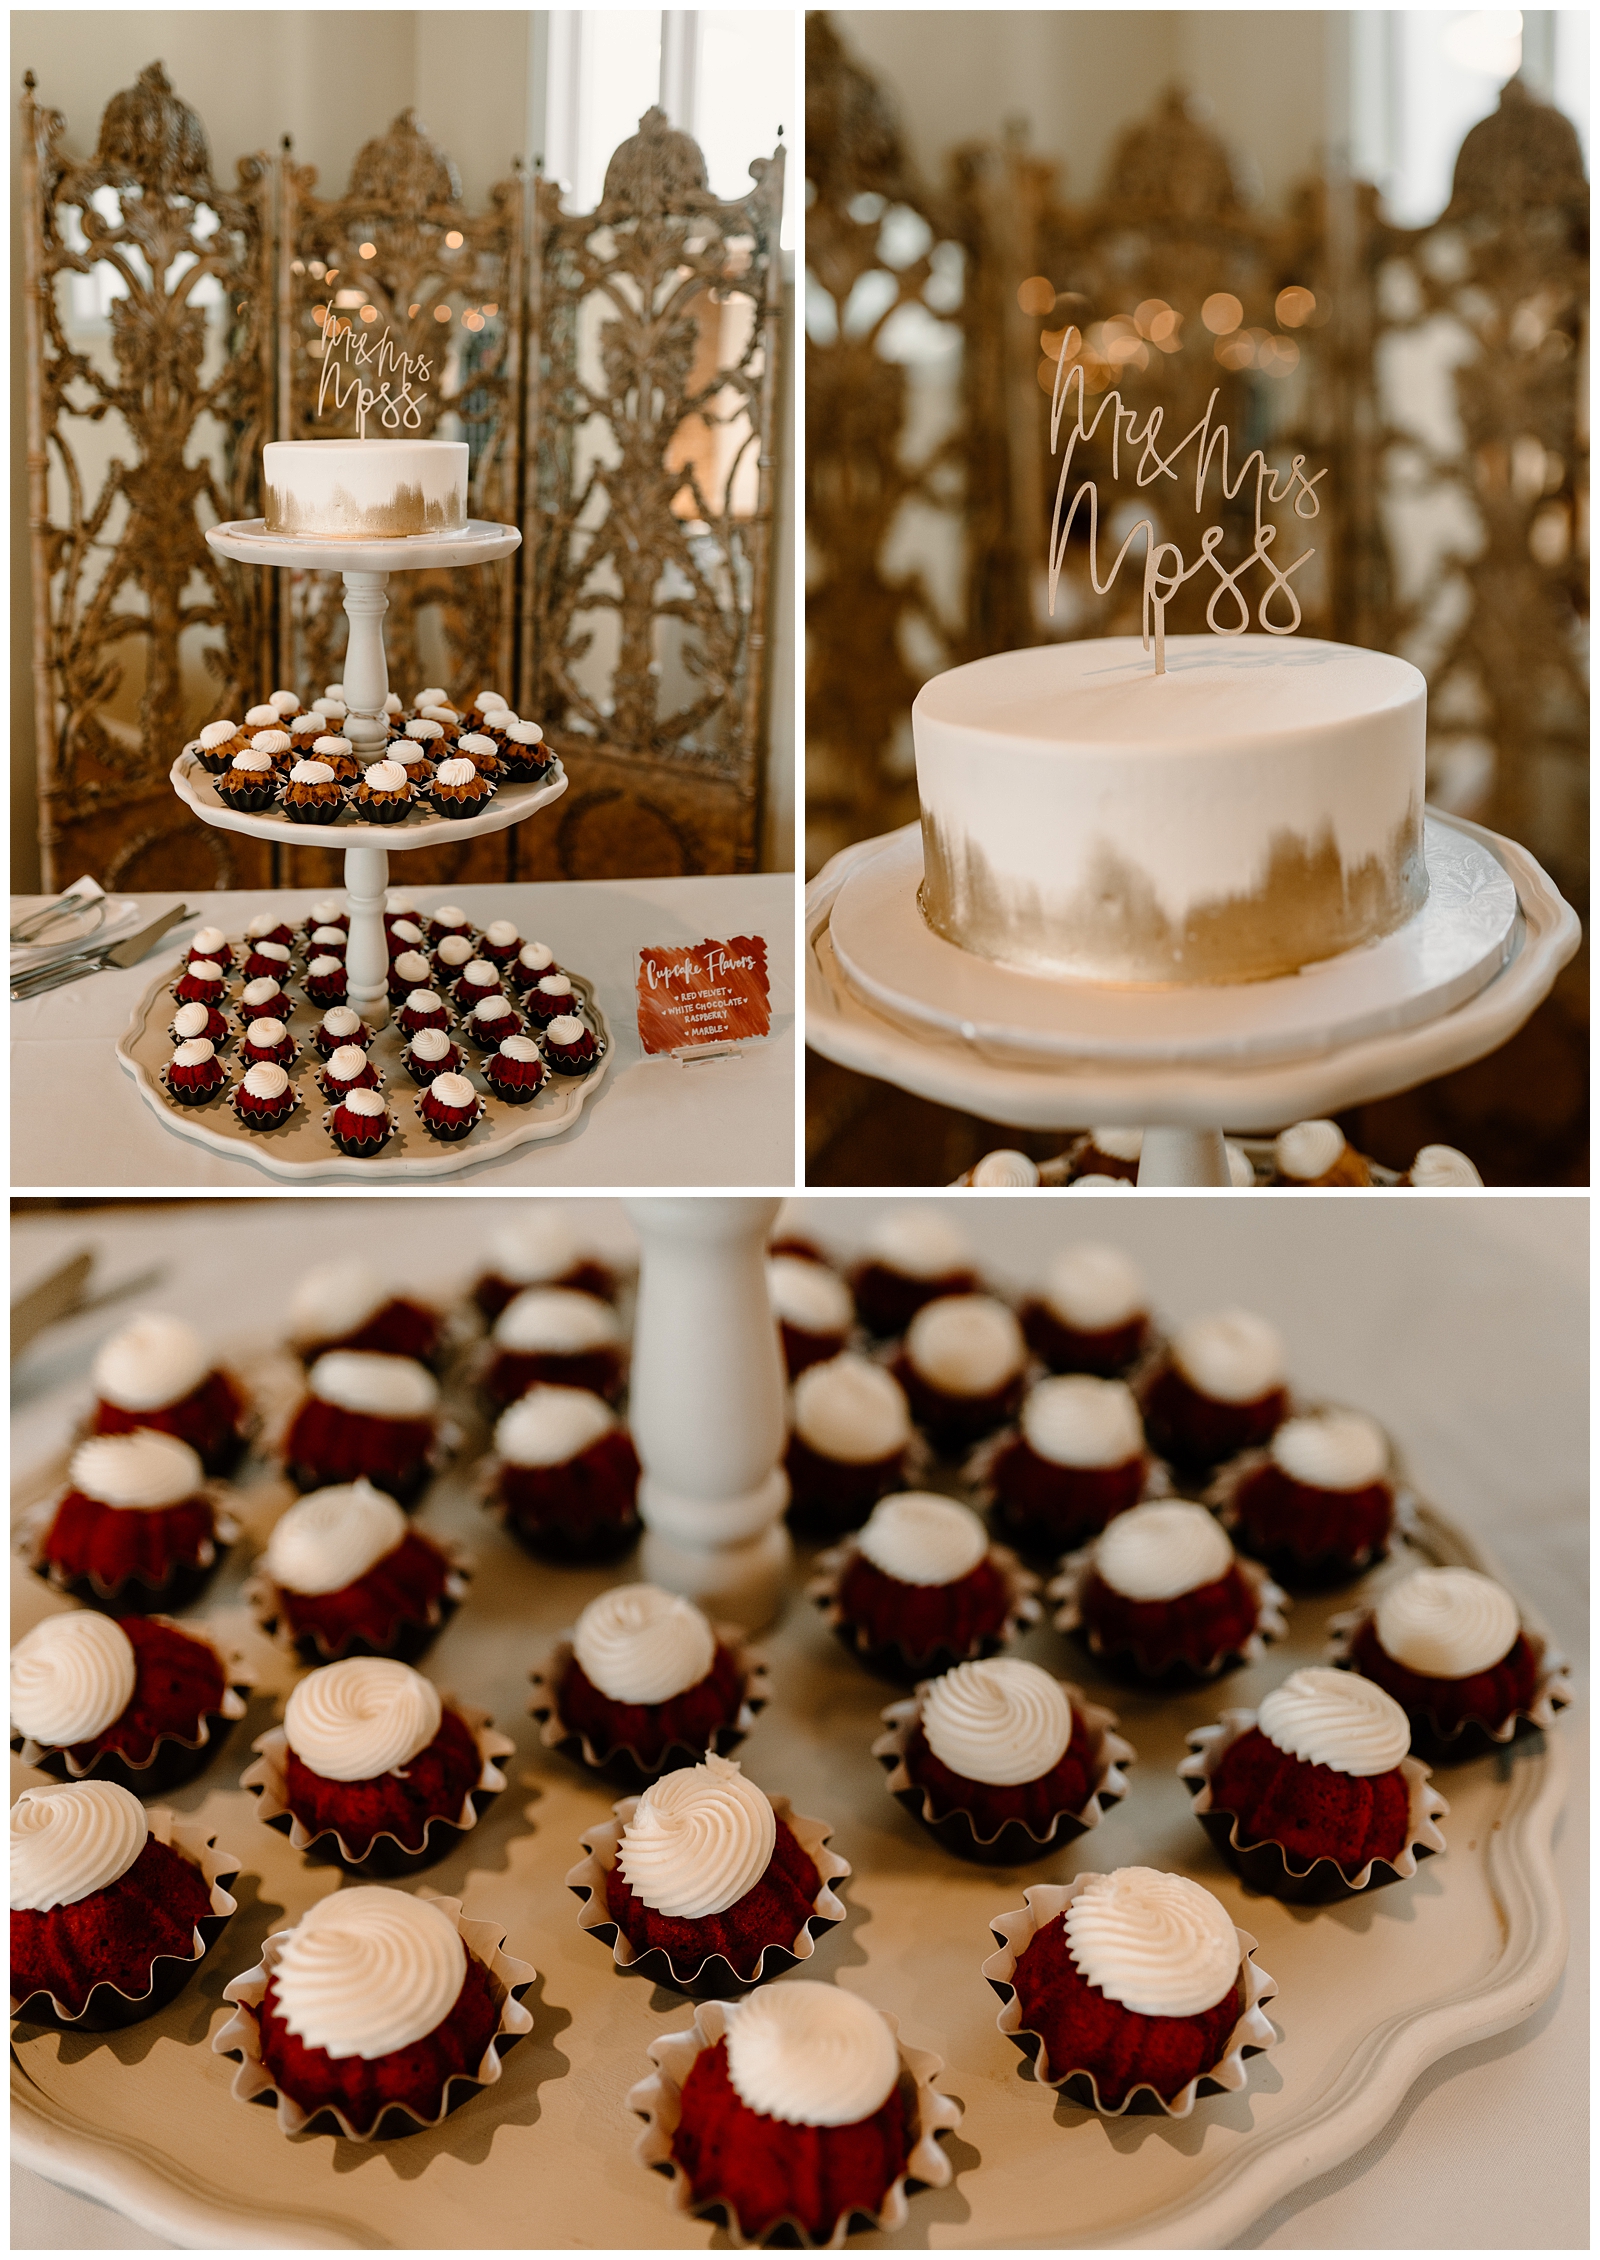 Maxie B wedding cake and cupcakes at fall Revolution Mill wedding in Greensboro, NC